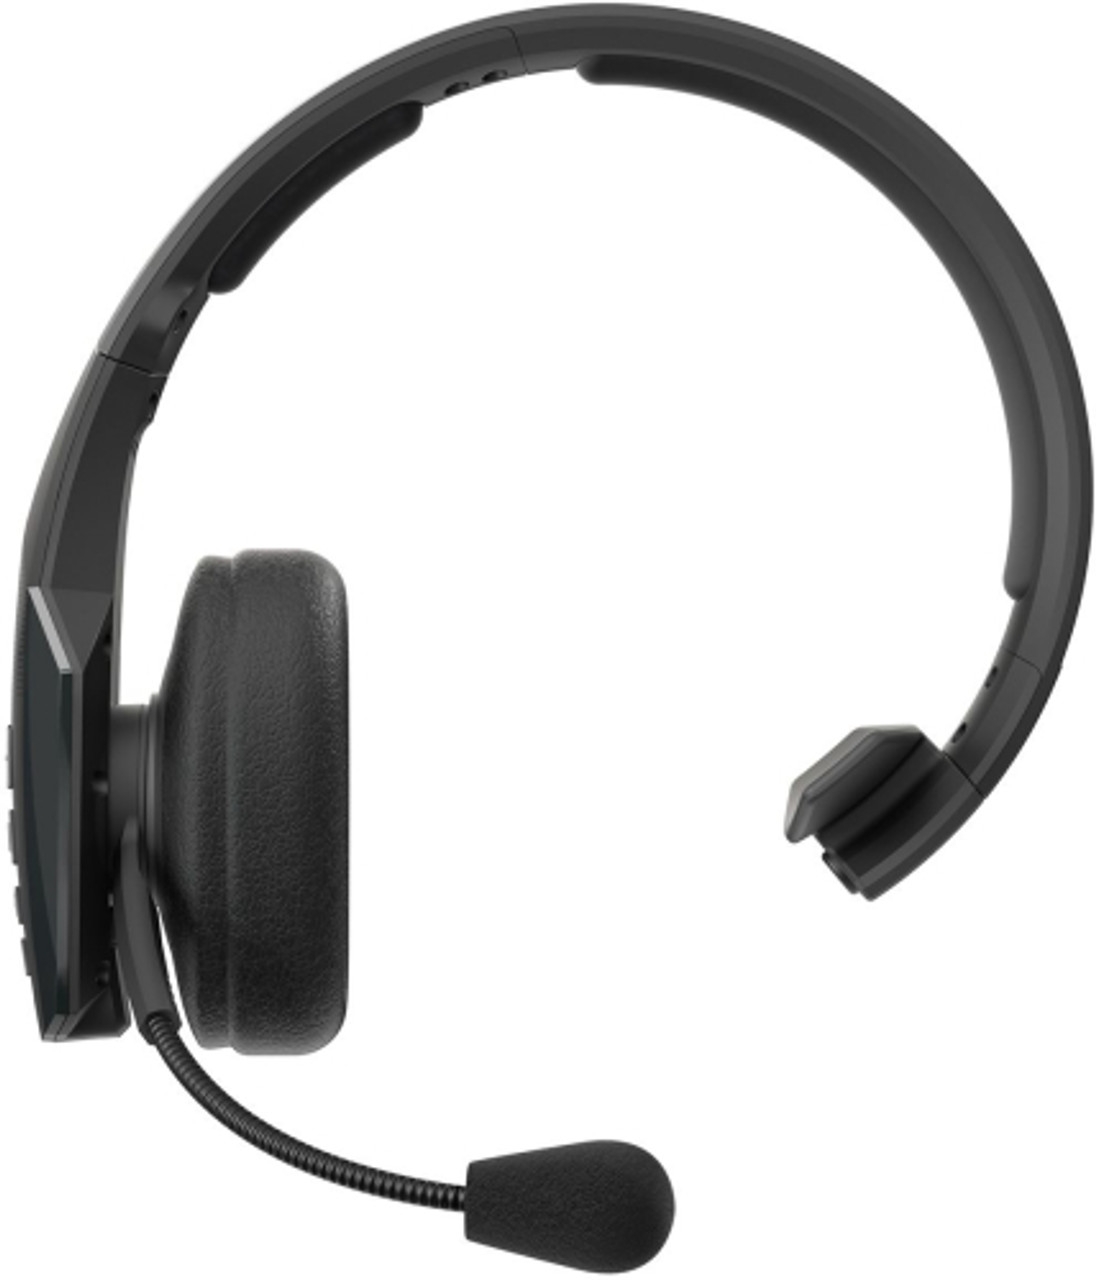 BlueParrott - B450-XT Wireless Headset - Black